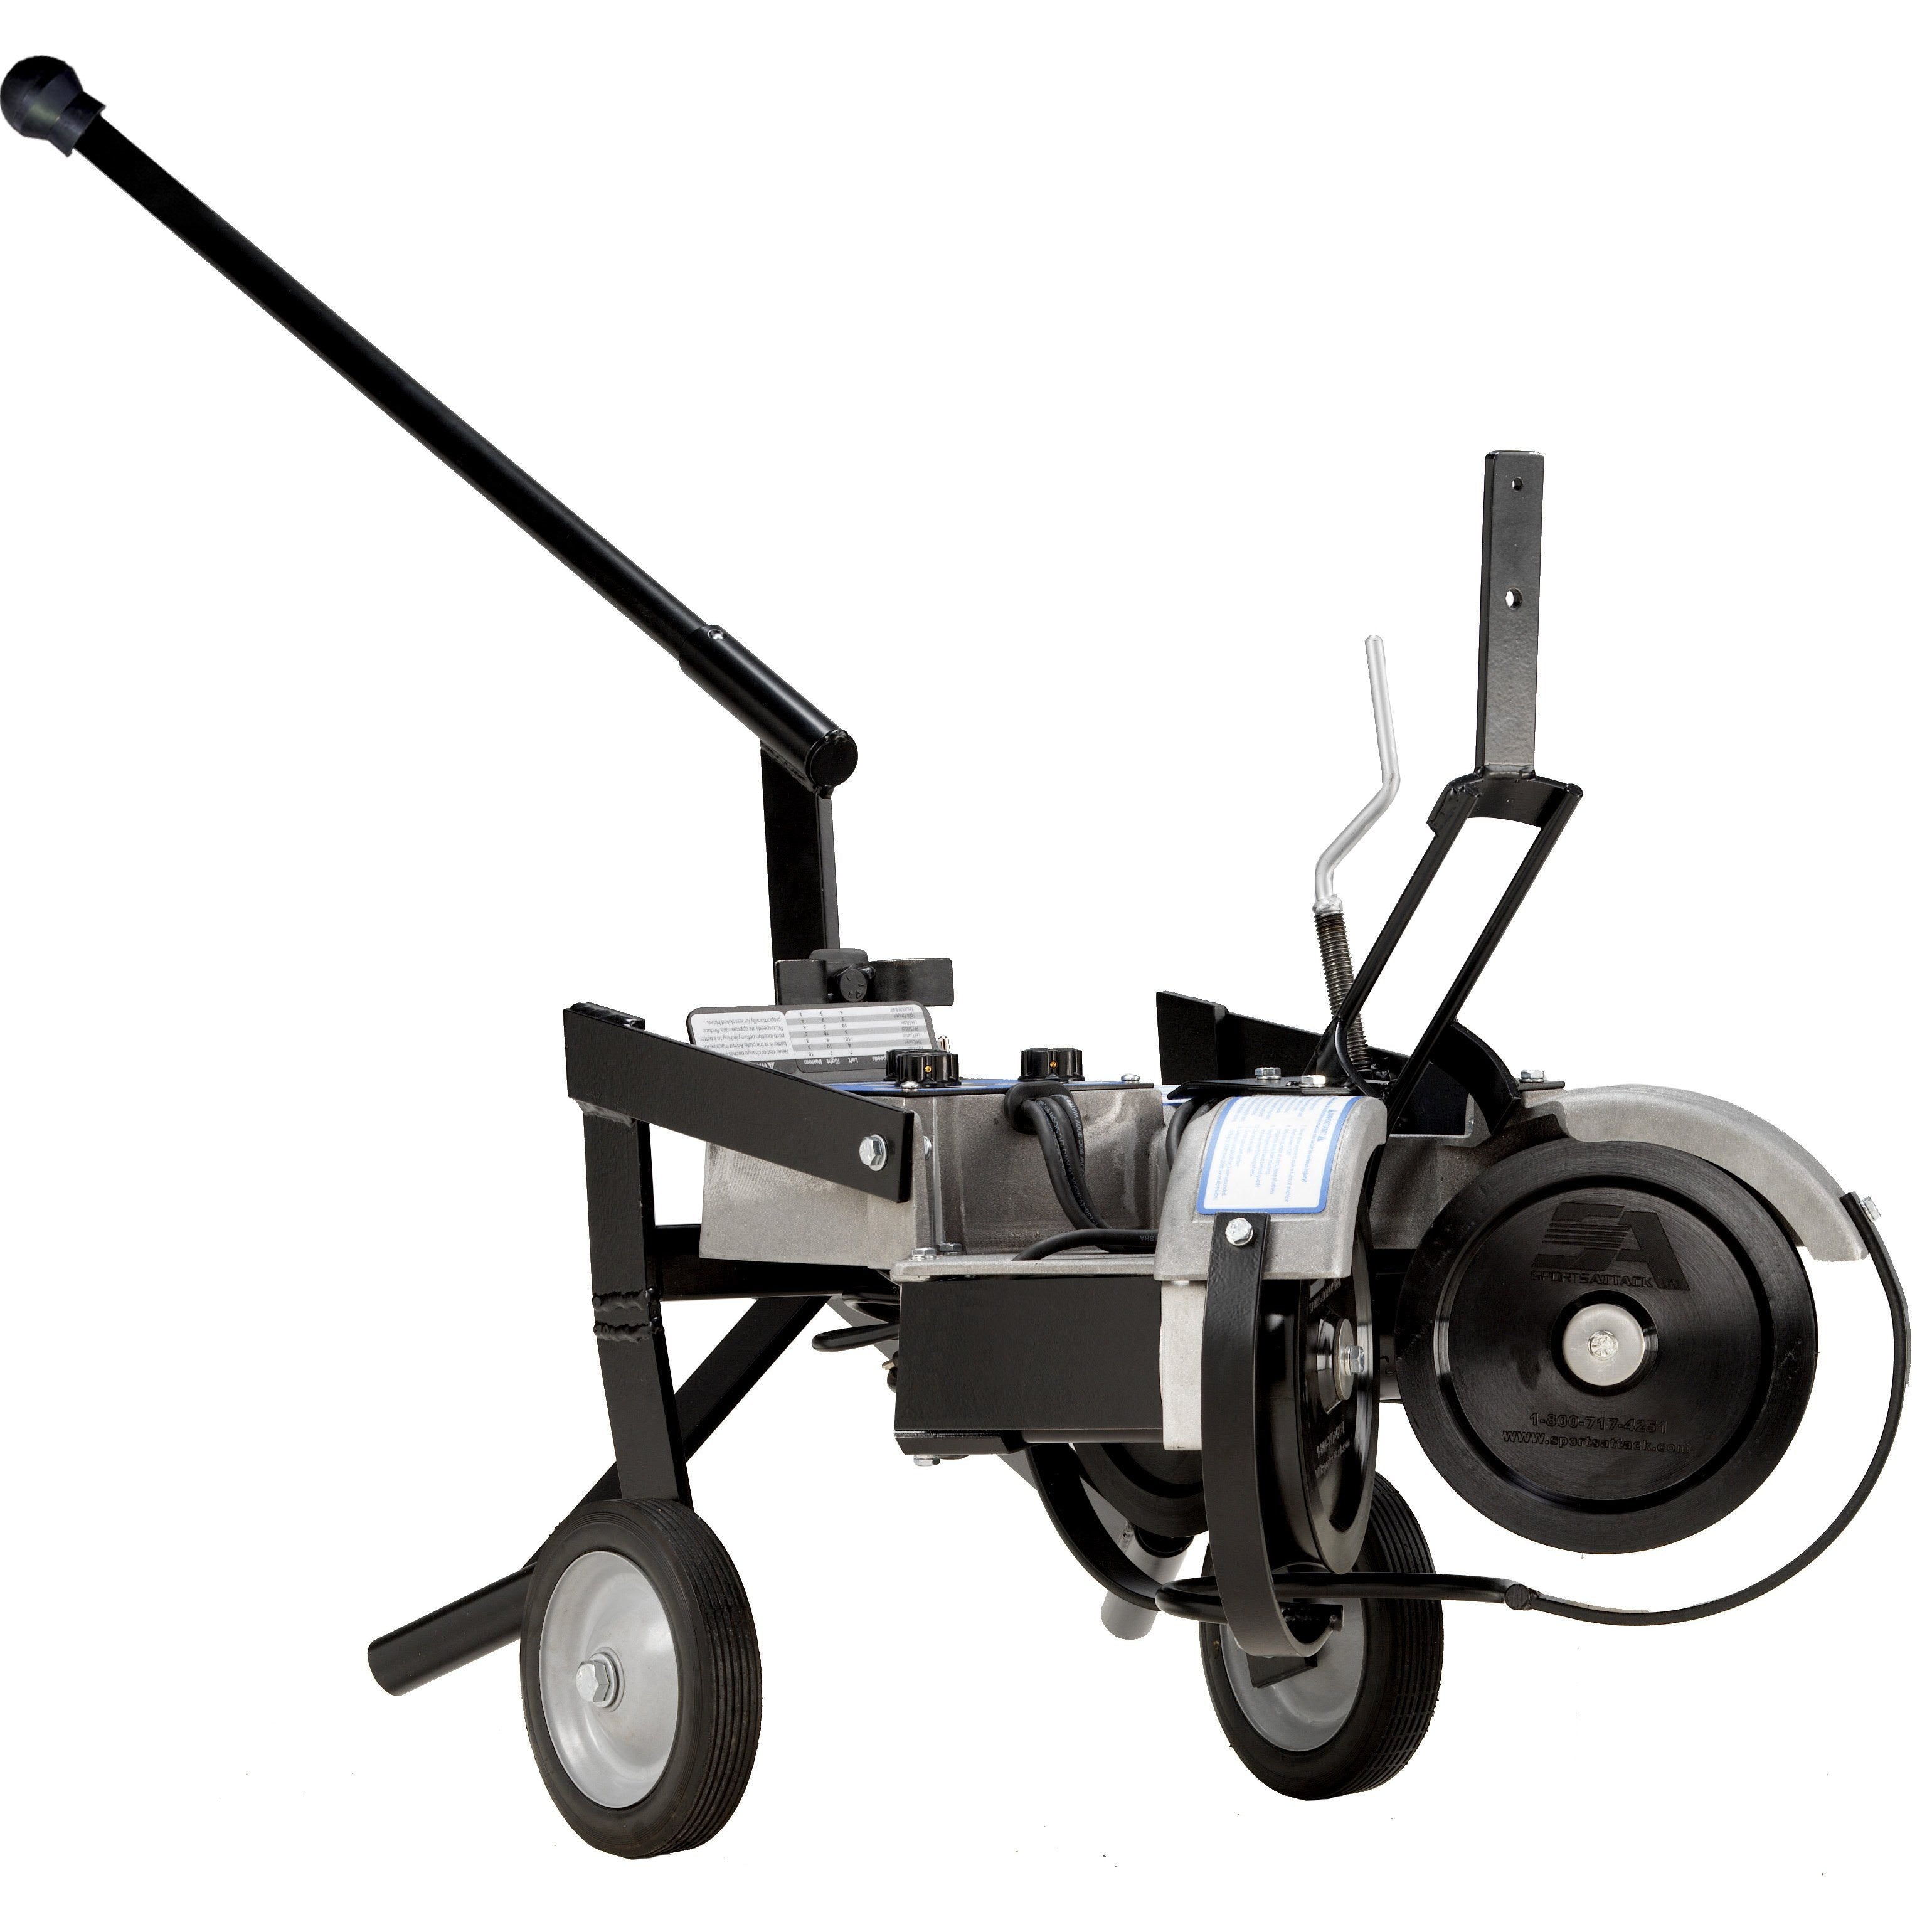 Jr. Hack Attack Three Wheel Pitching Machine portable on transport wheels